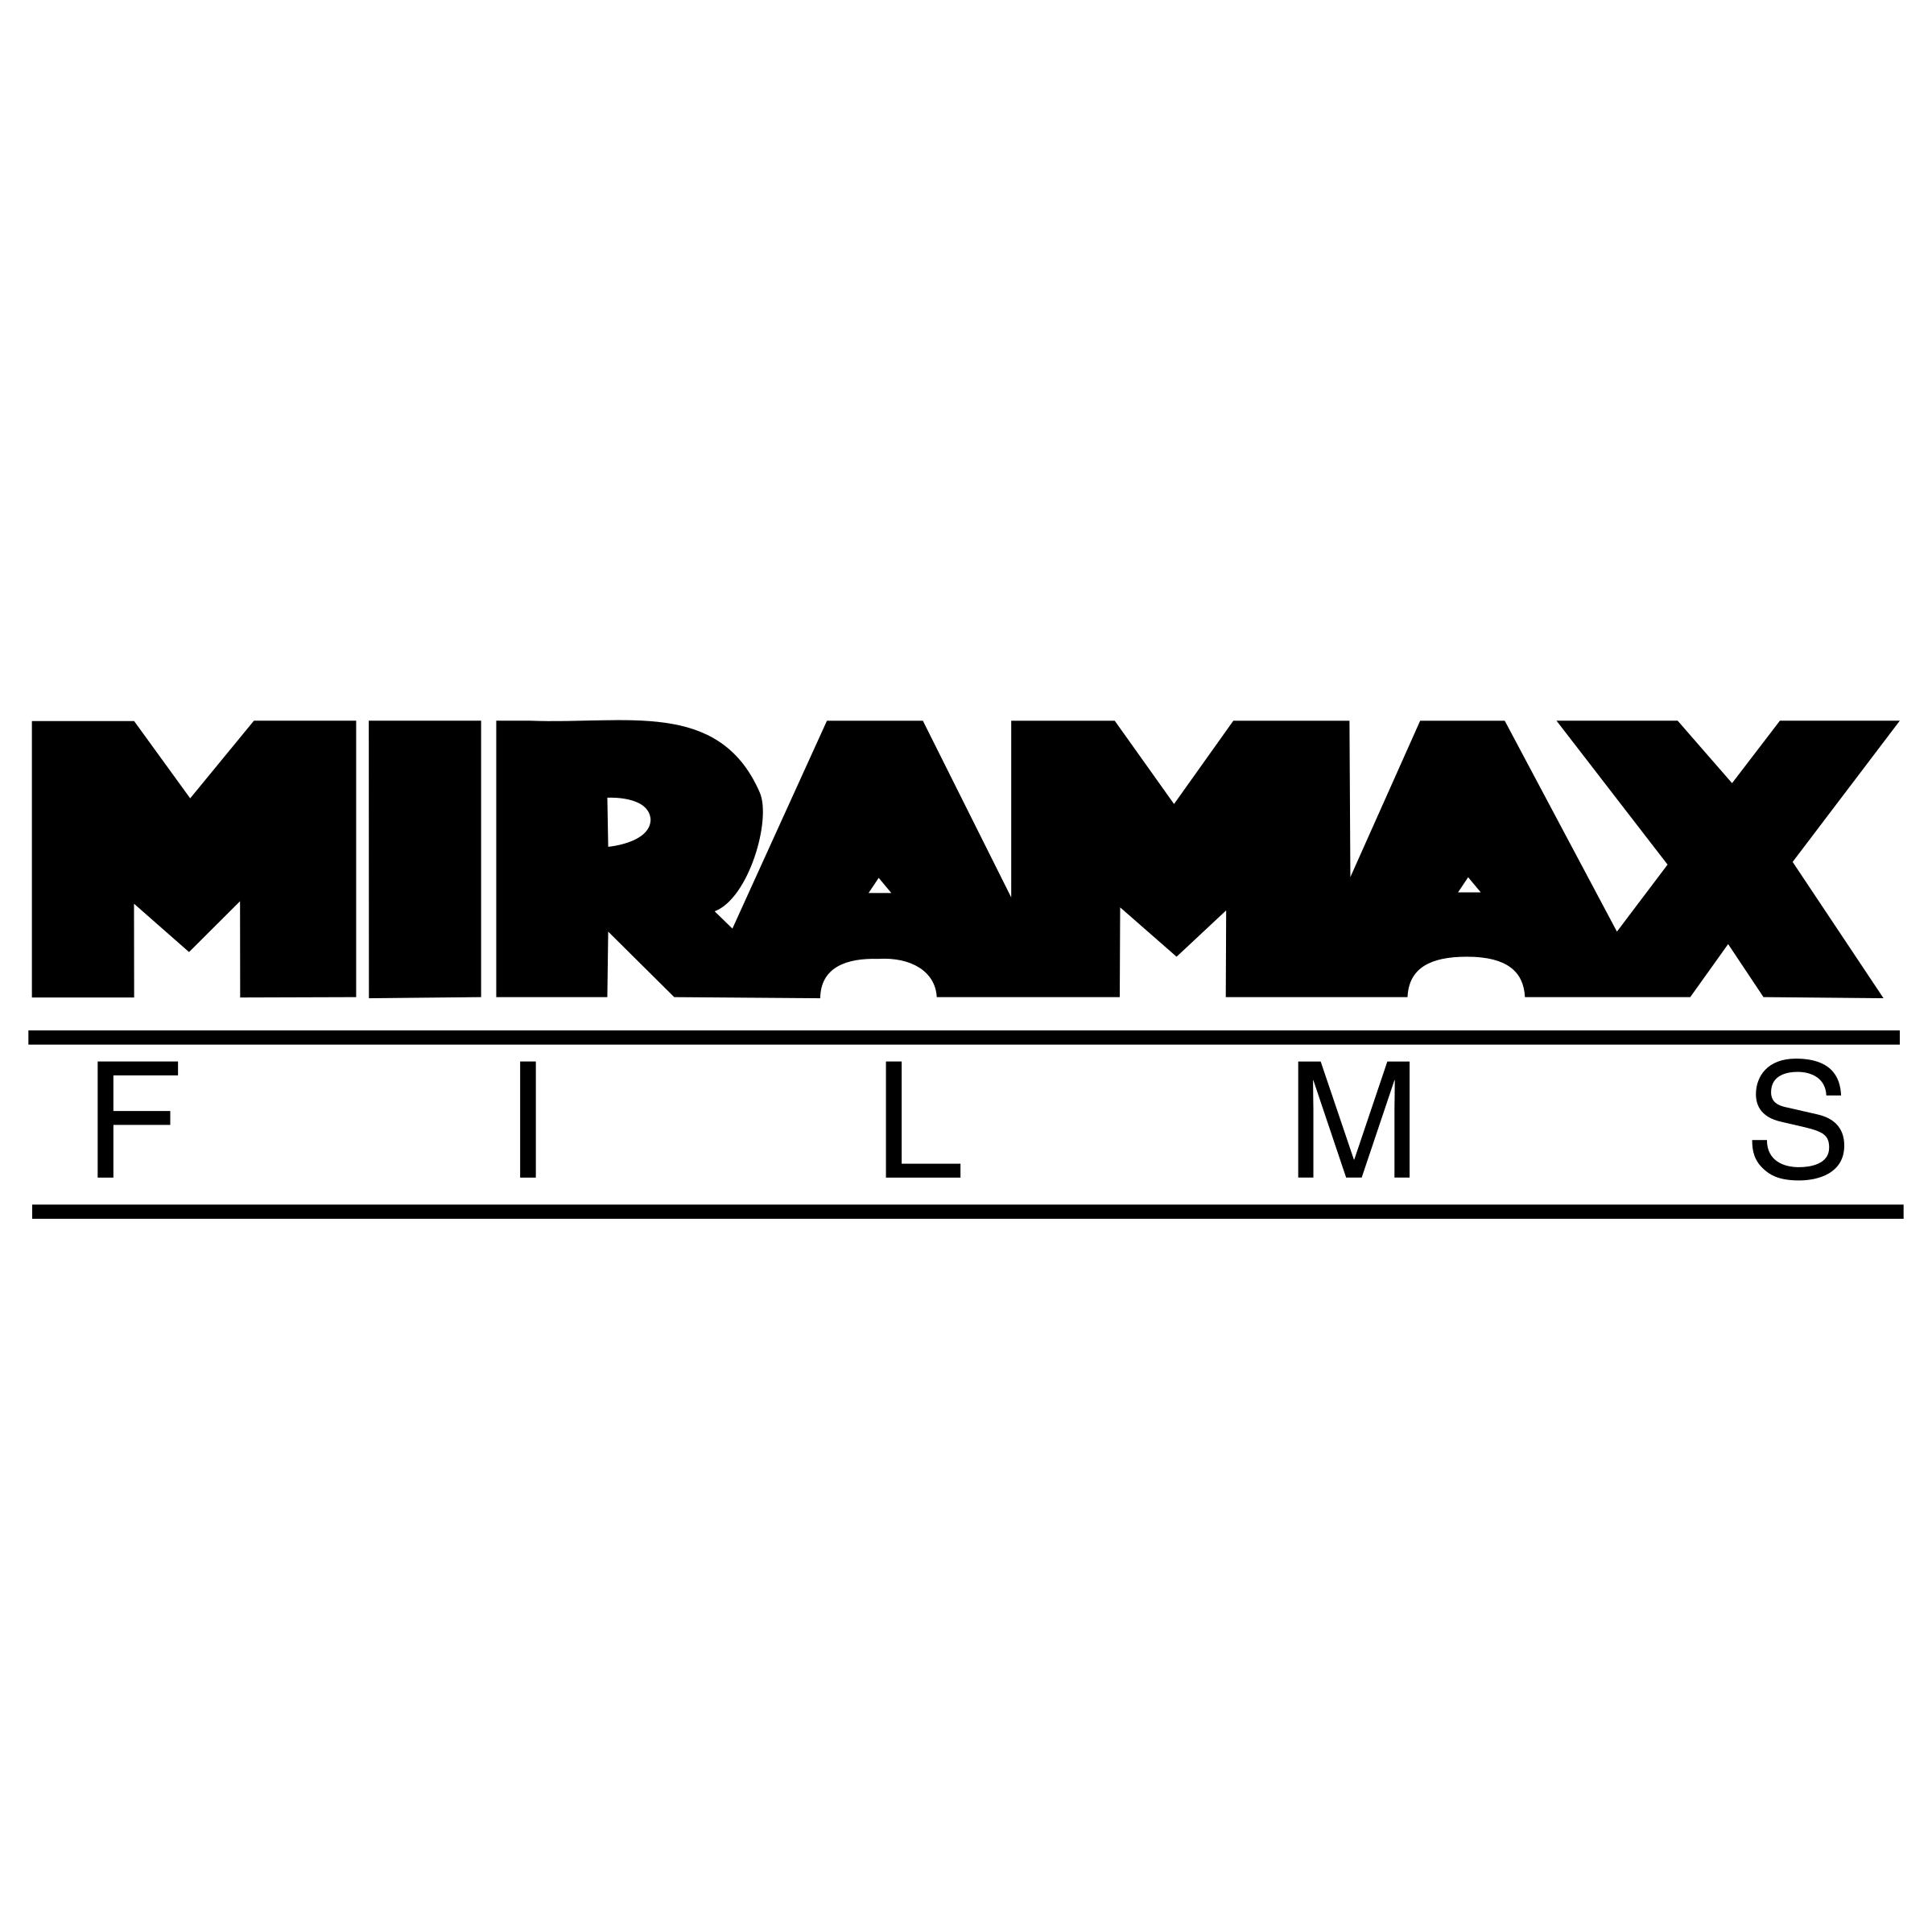 Miramax Logo - Miramax Films Logo PNG Transparent & SVG Vector - Freebie Supply